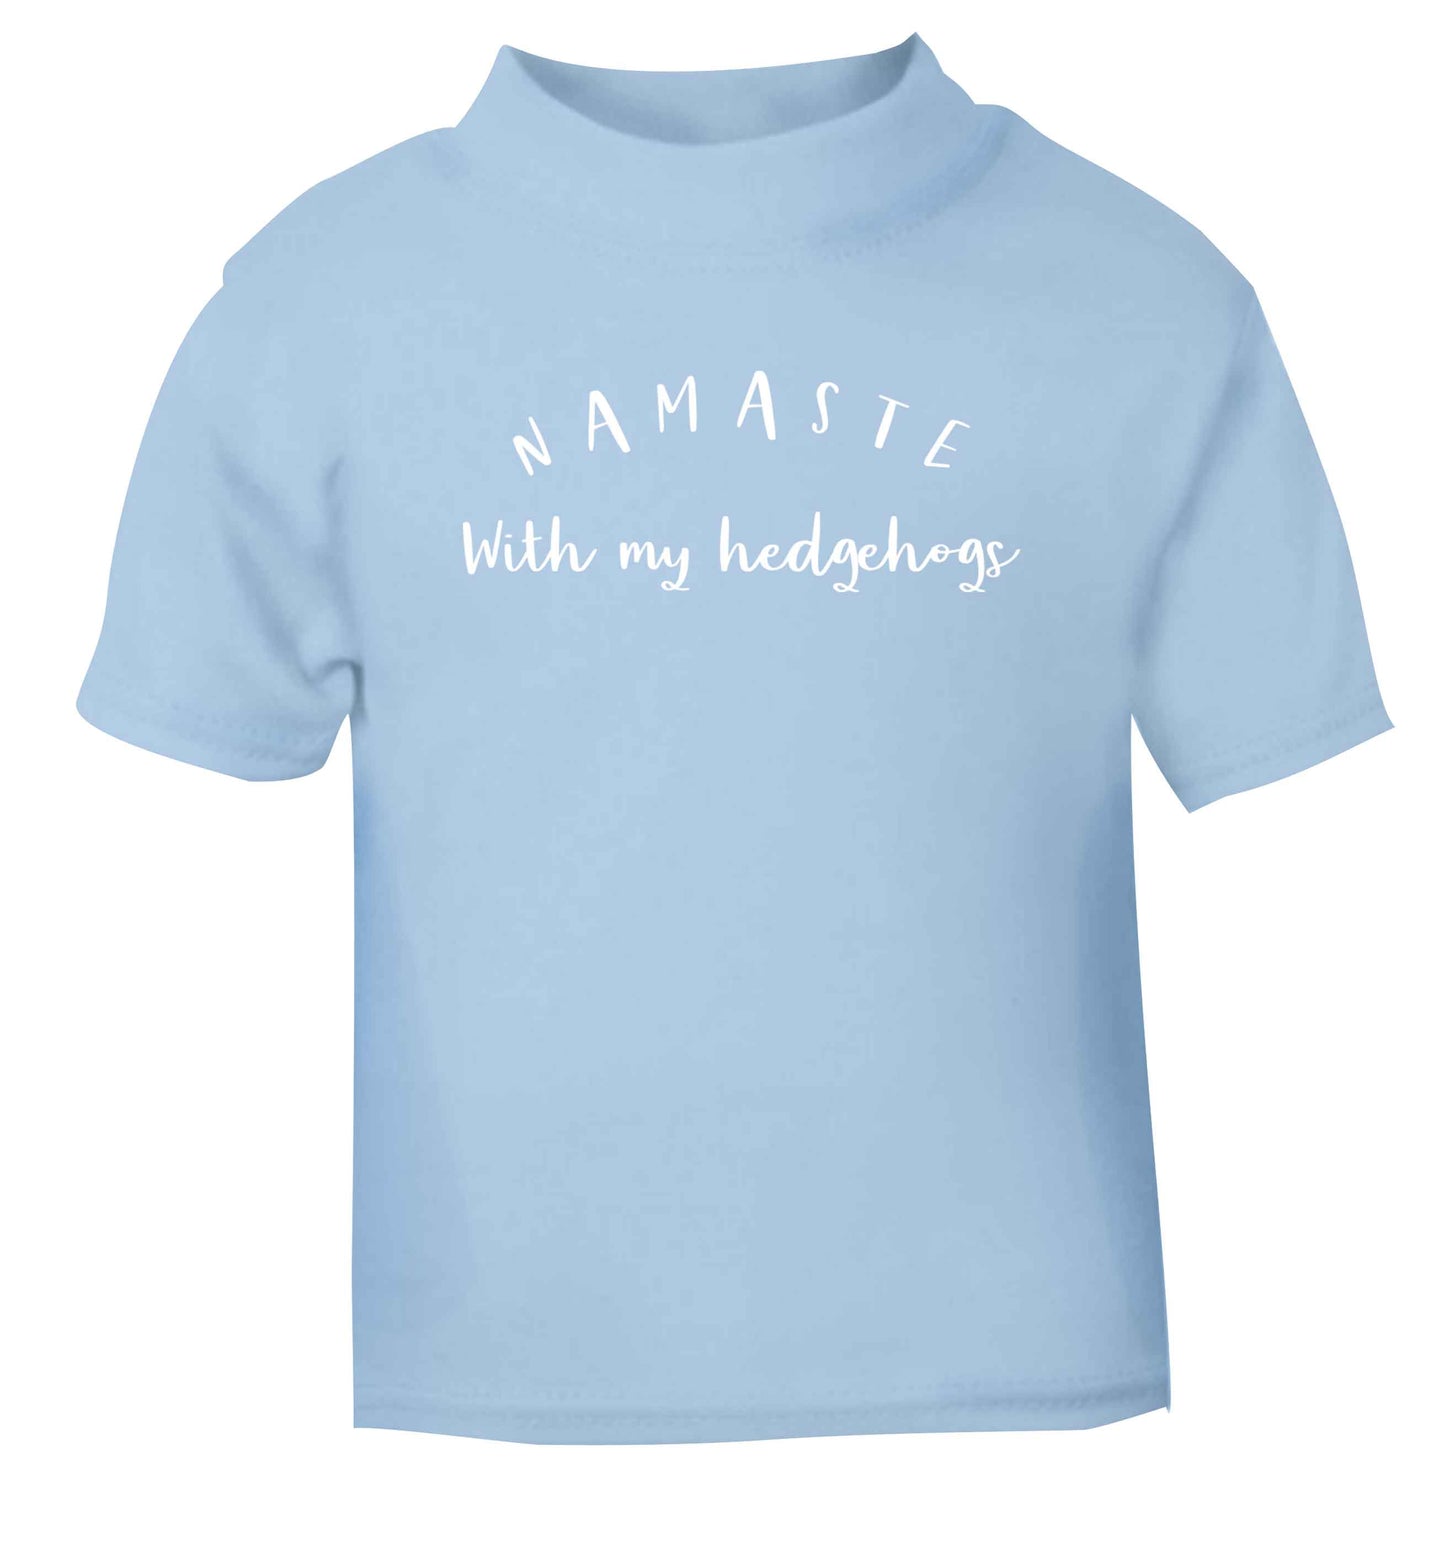 Namaste with my hedgehog light blue Baby Toddler Tshirt 2 Years